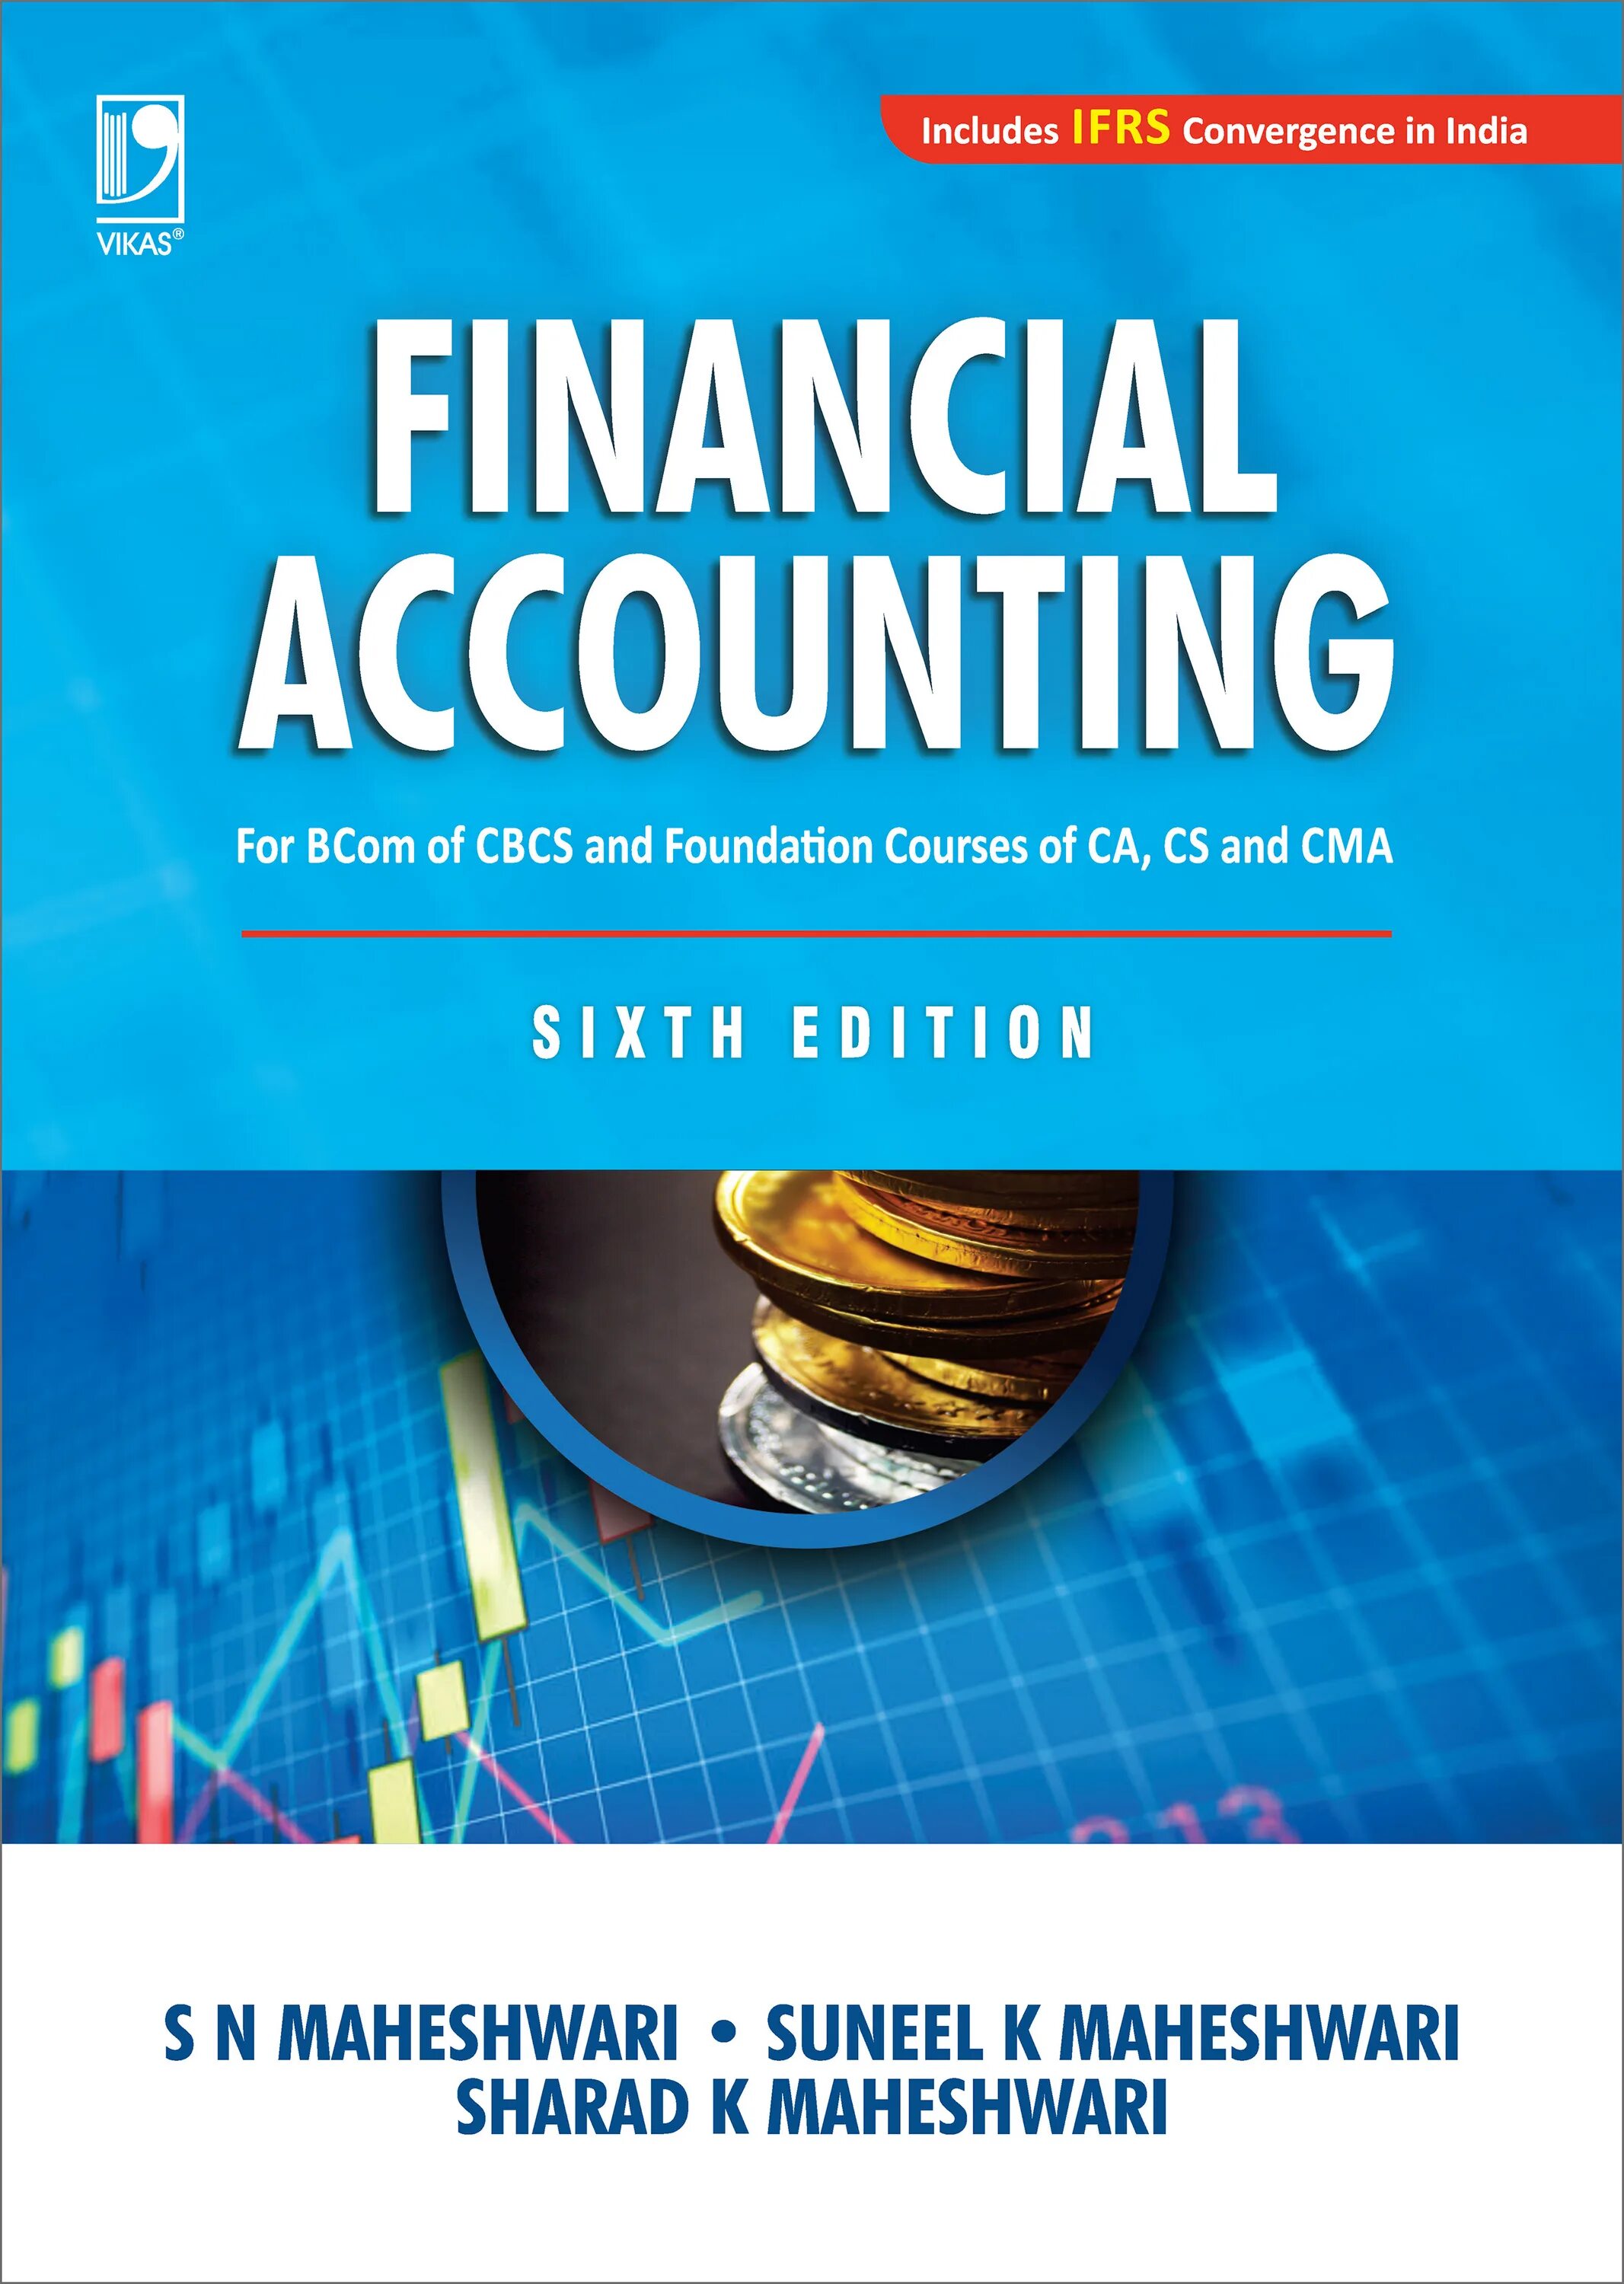 Accounting book. Accounting books. Financial Accounting. Finance book. Управленческий учет книга.